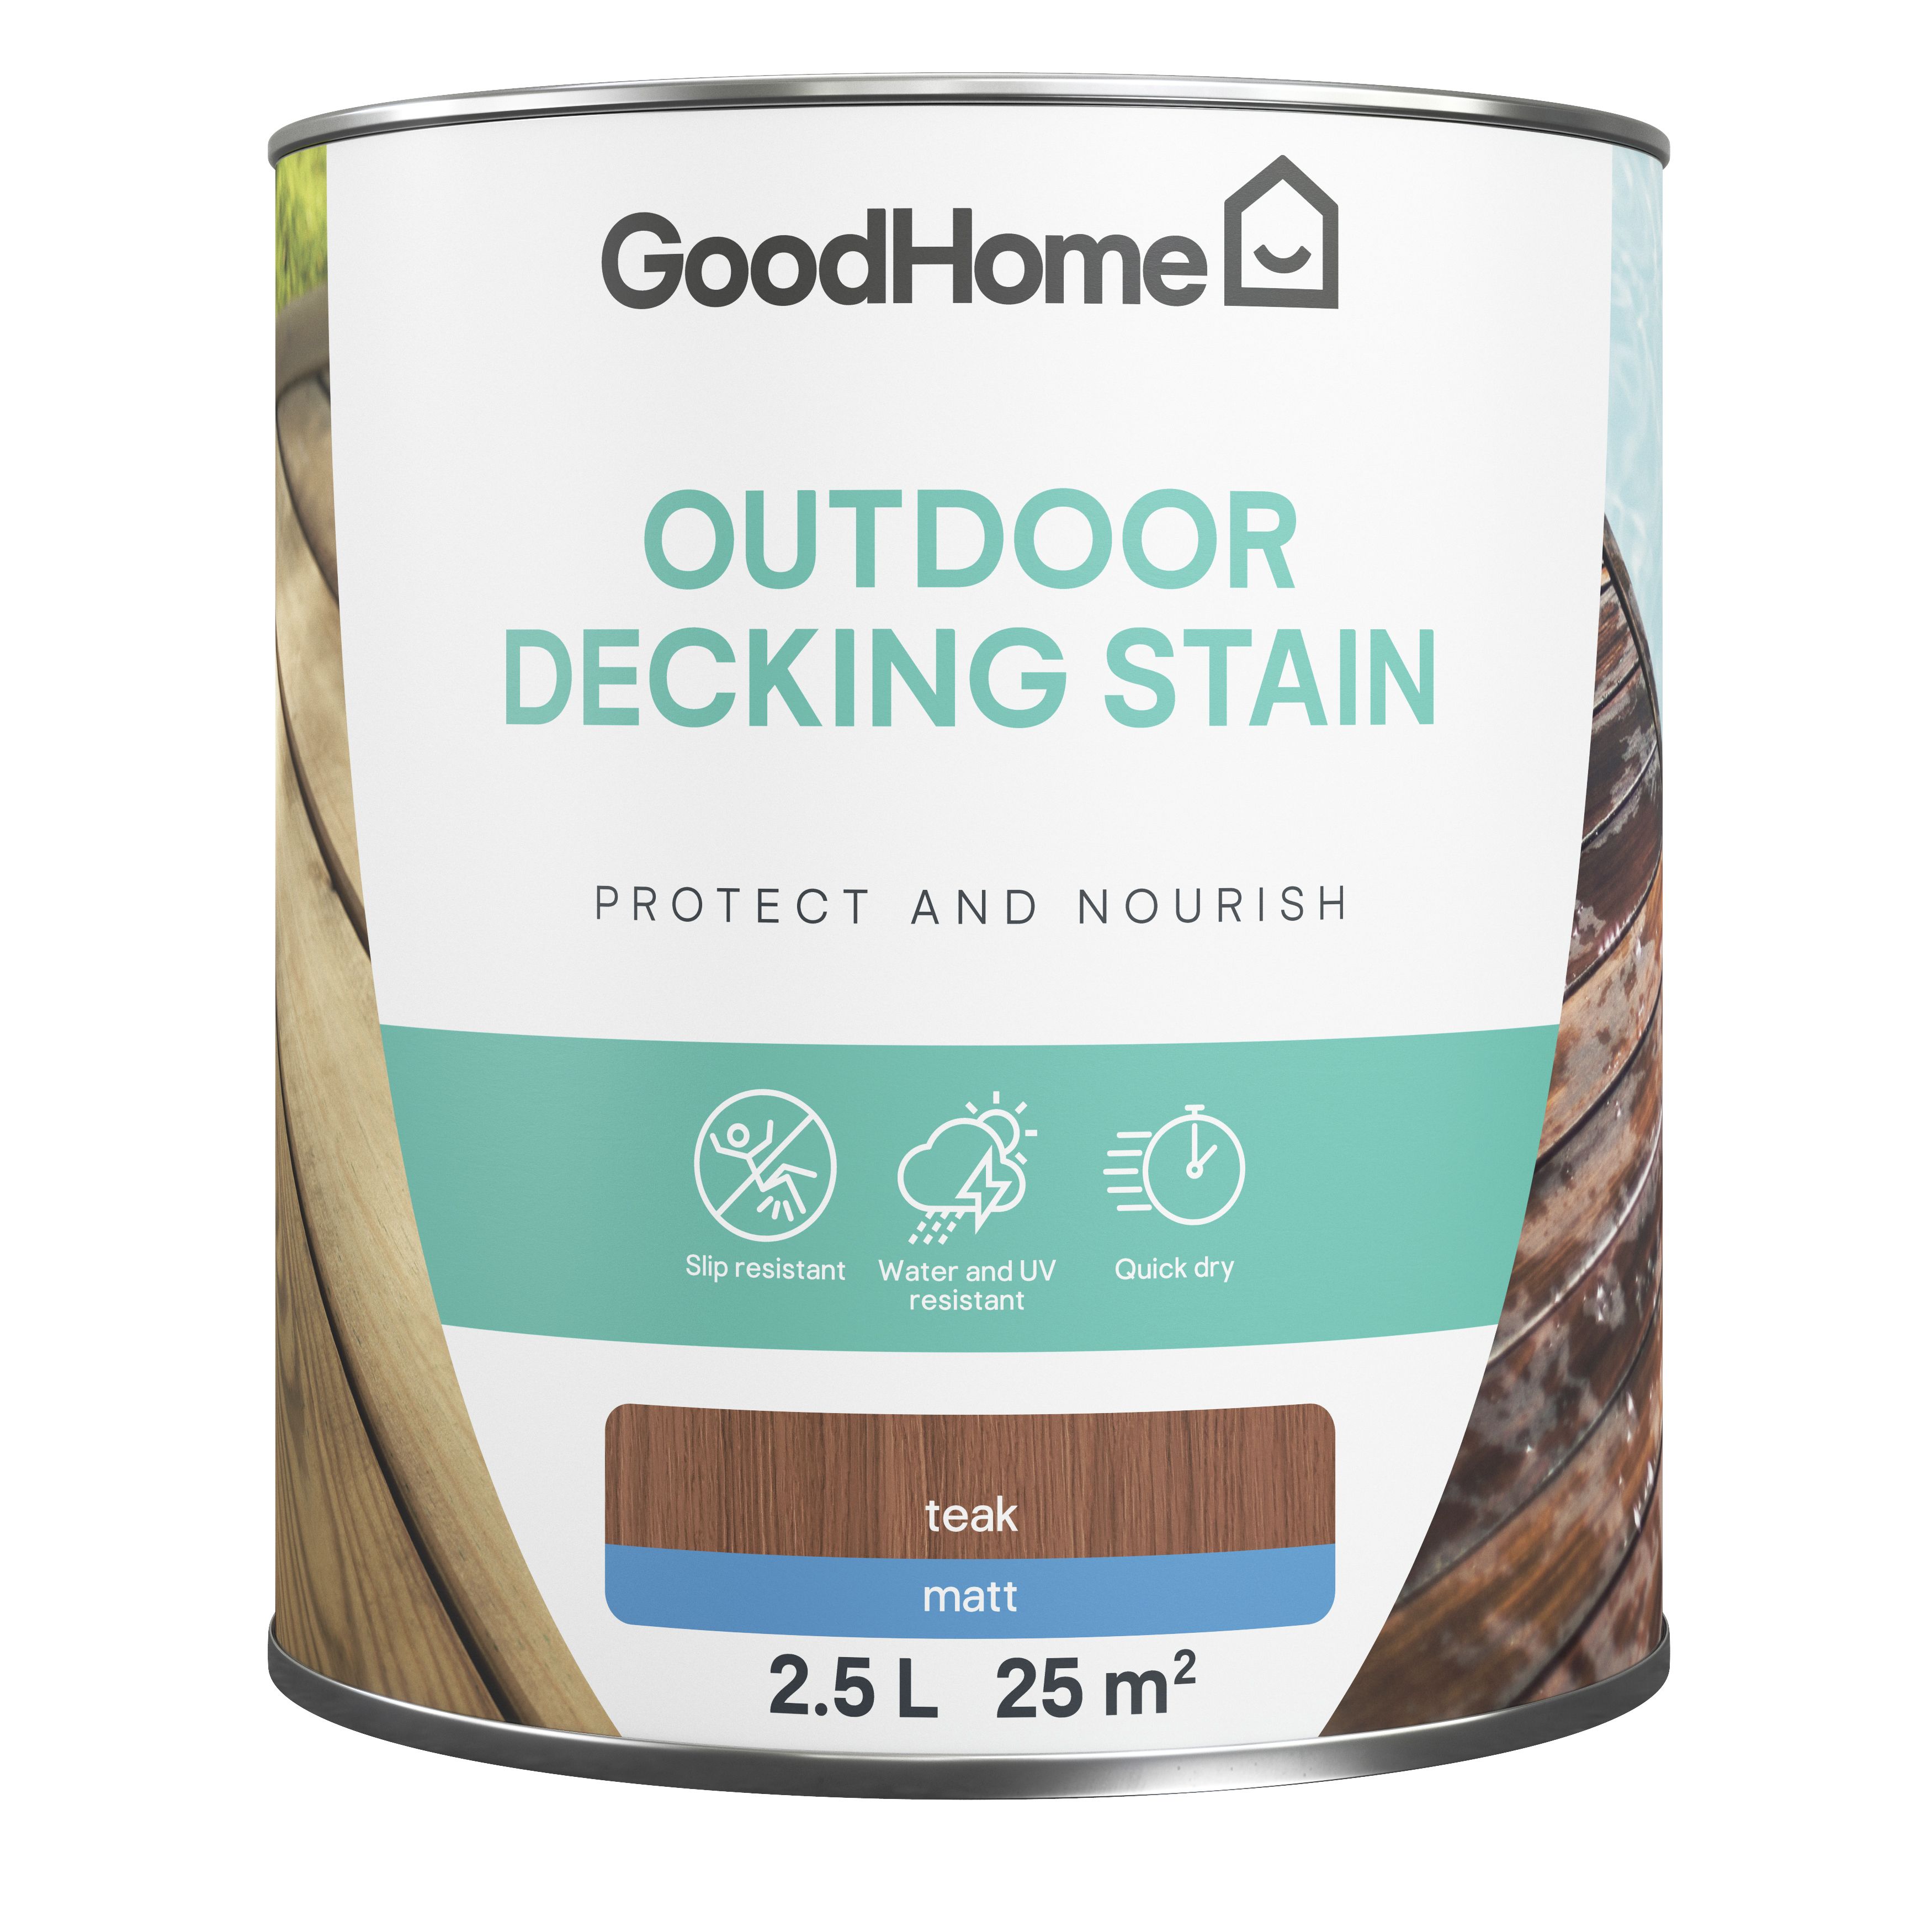 GoodHome Teak Matt Quick dry Decking Wood stain, 2.5L